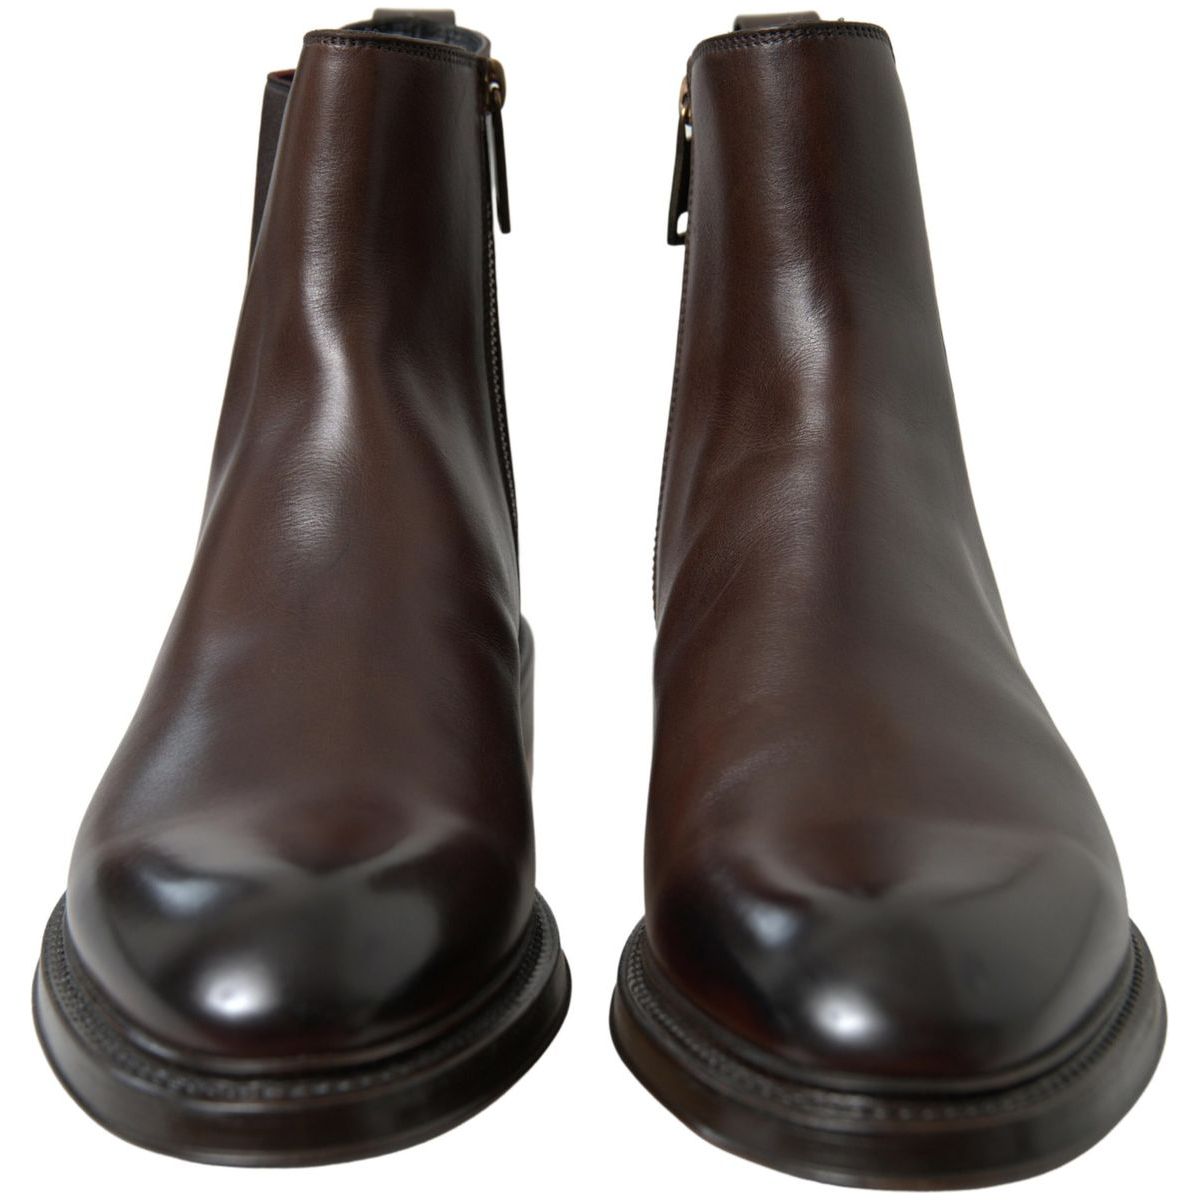 Dolce & Gabbana Elegant Leather Chelsea Boots brown-leather-chelsea-mens-boots-shoes 465A8386-scaled-616250da-f64_c23ec9c2-4e9f-4e31-acc4-583c4883014b.jpg